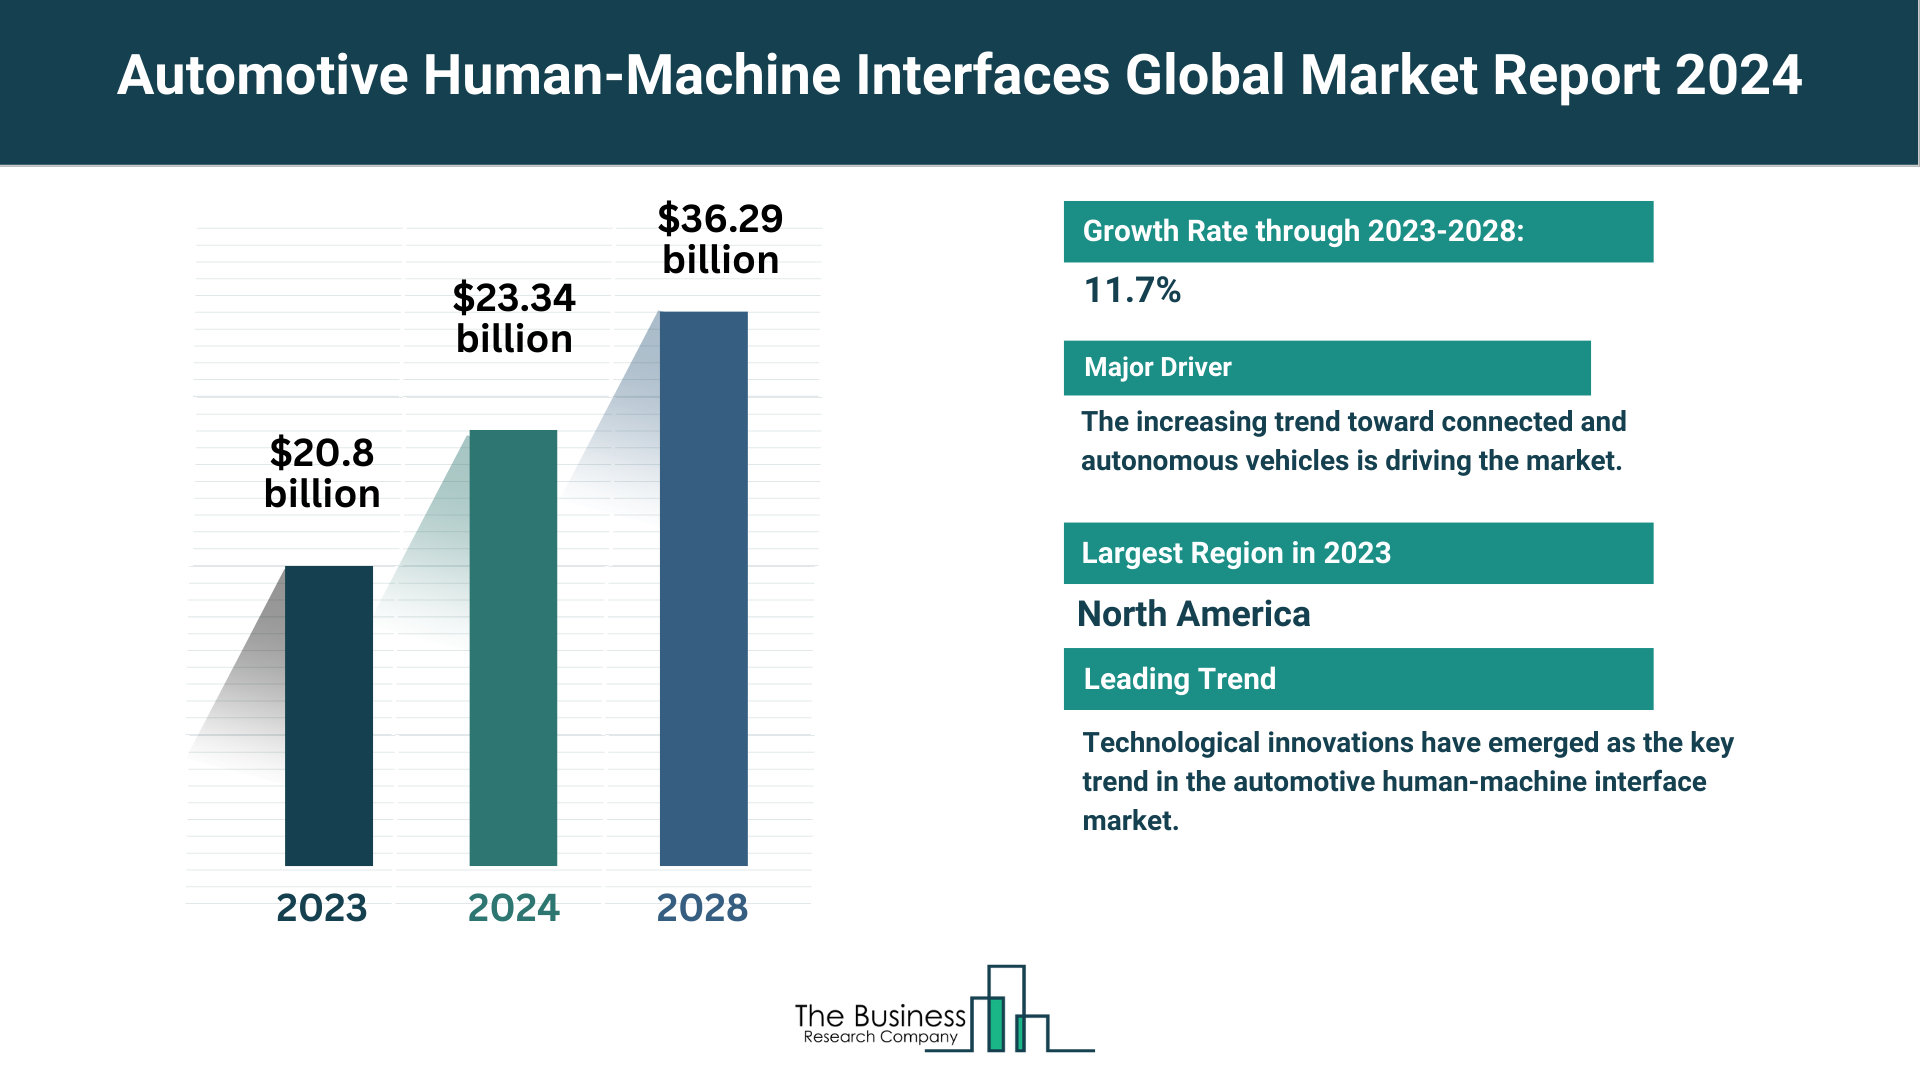 How Will Automotive Human-Machine Interfaces Market Grow Through 2024-2033?